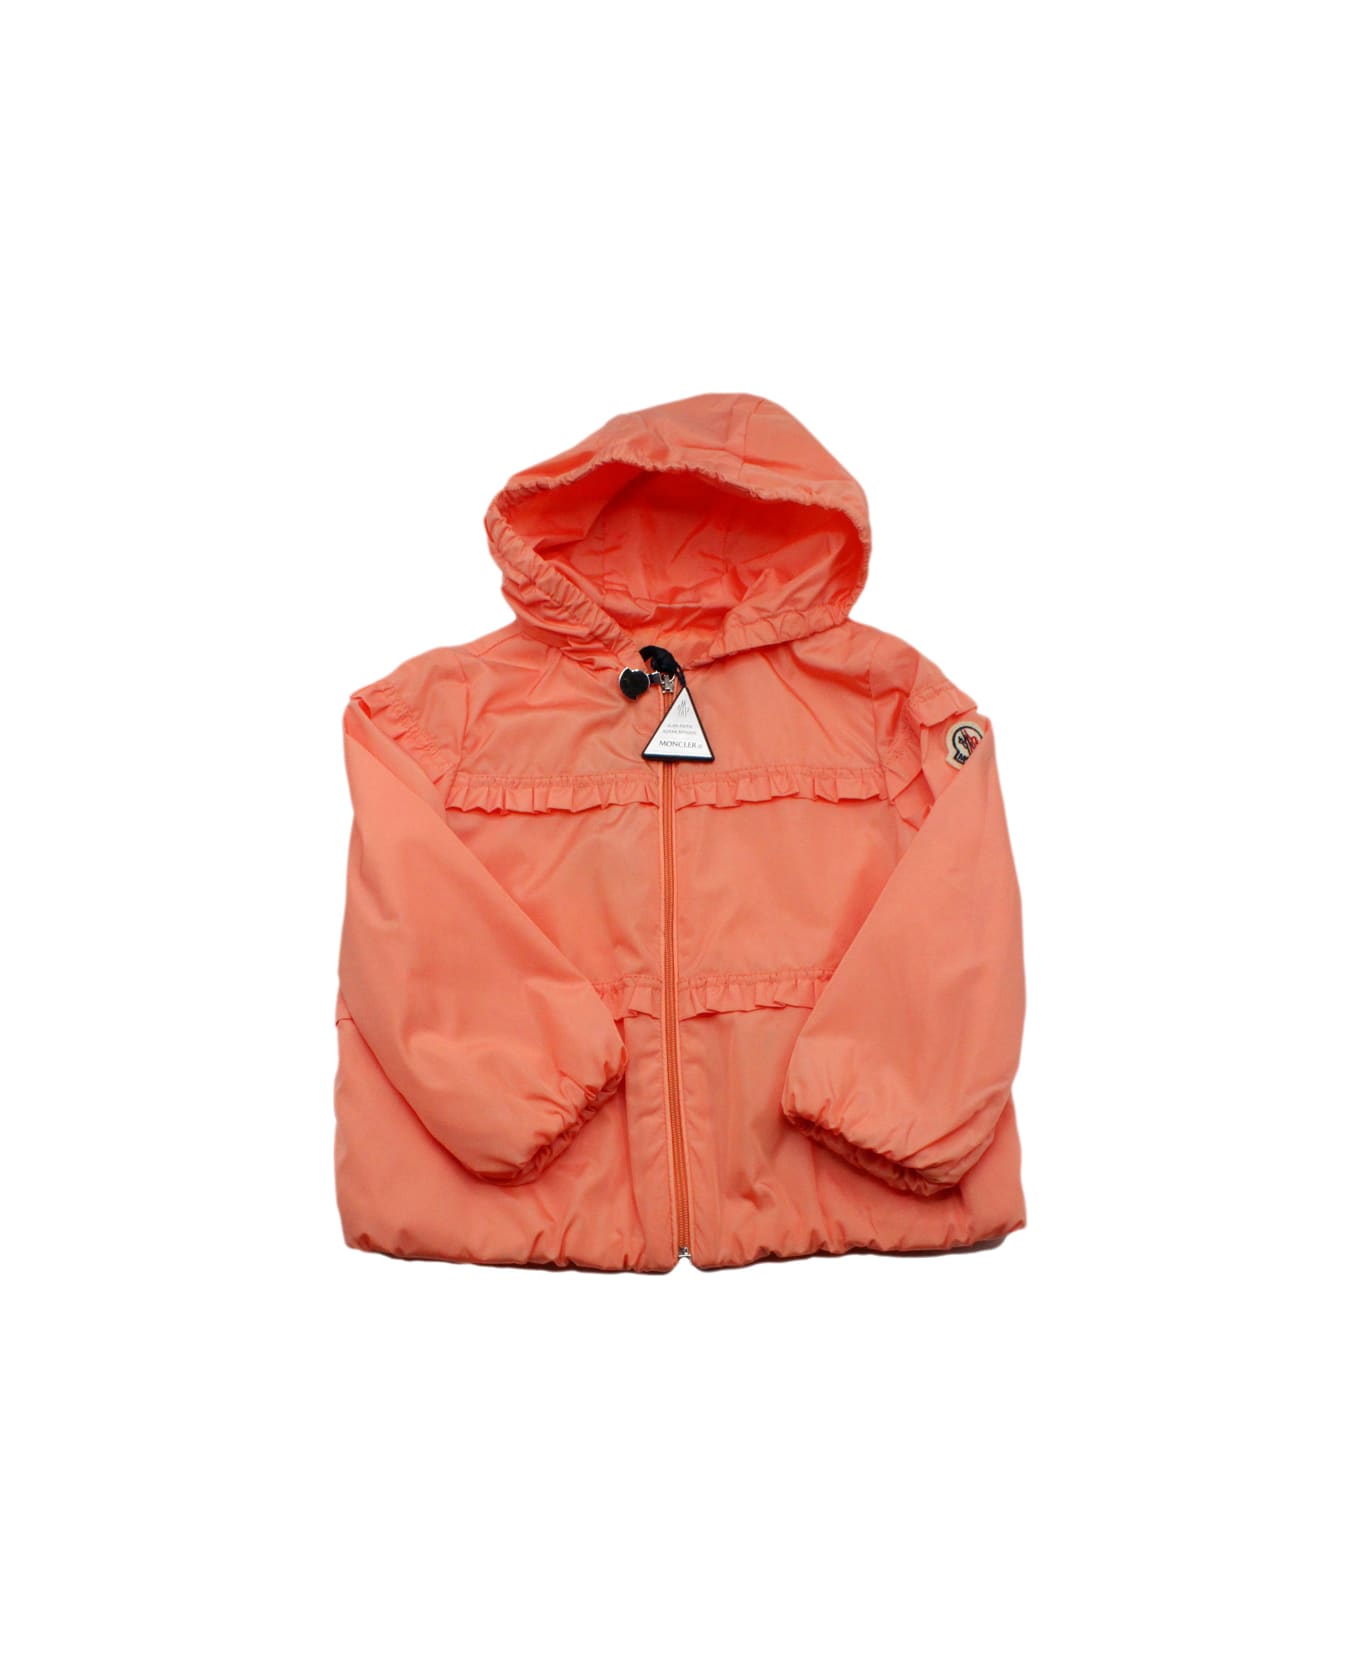 Moncler Hiti Jacket In Light Nylon With Hood, Embellished With Ruffles And Zip Closure. - Orange コート＆ジャケット